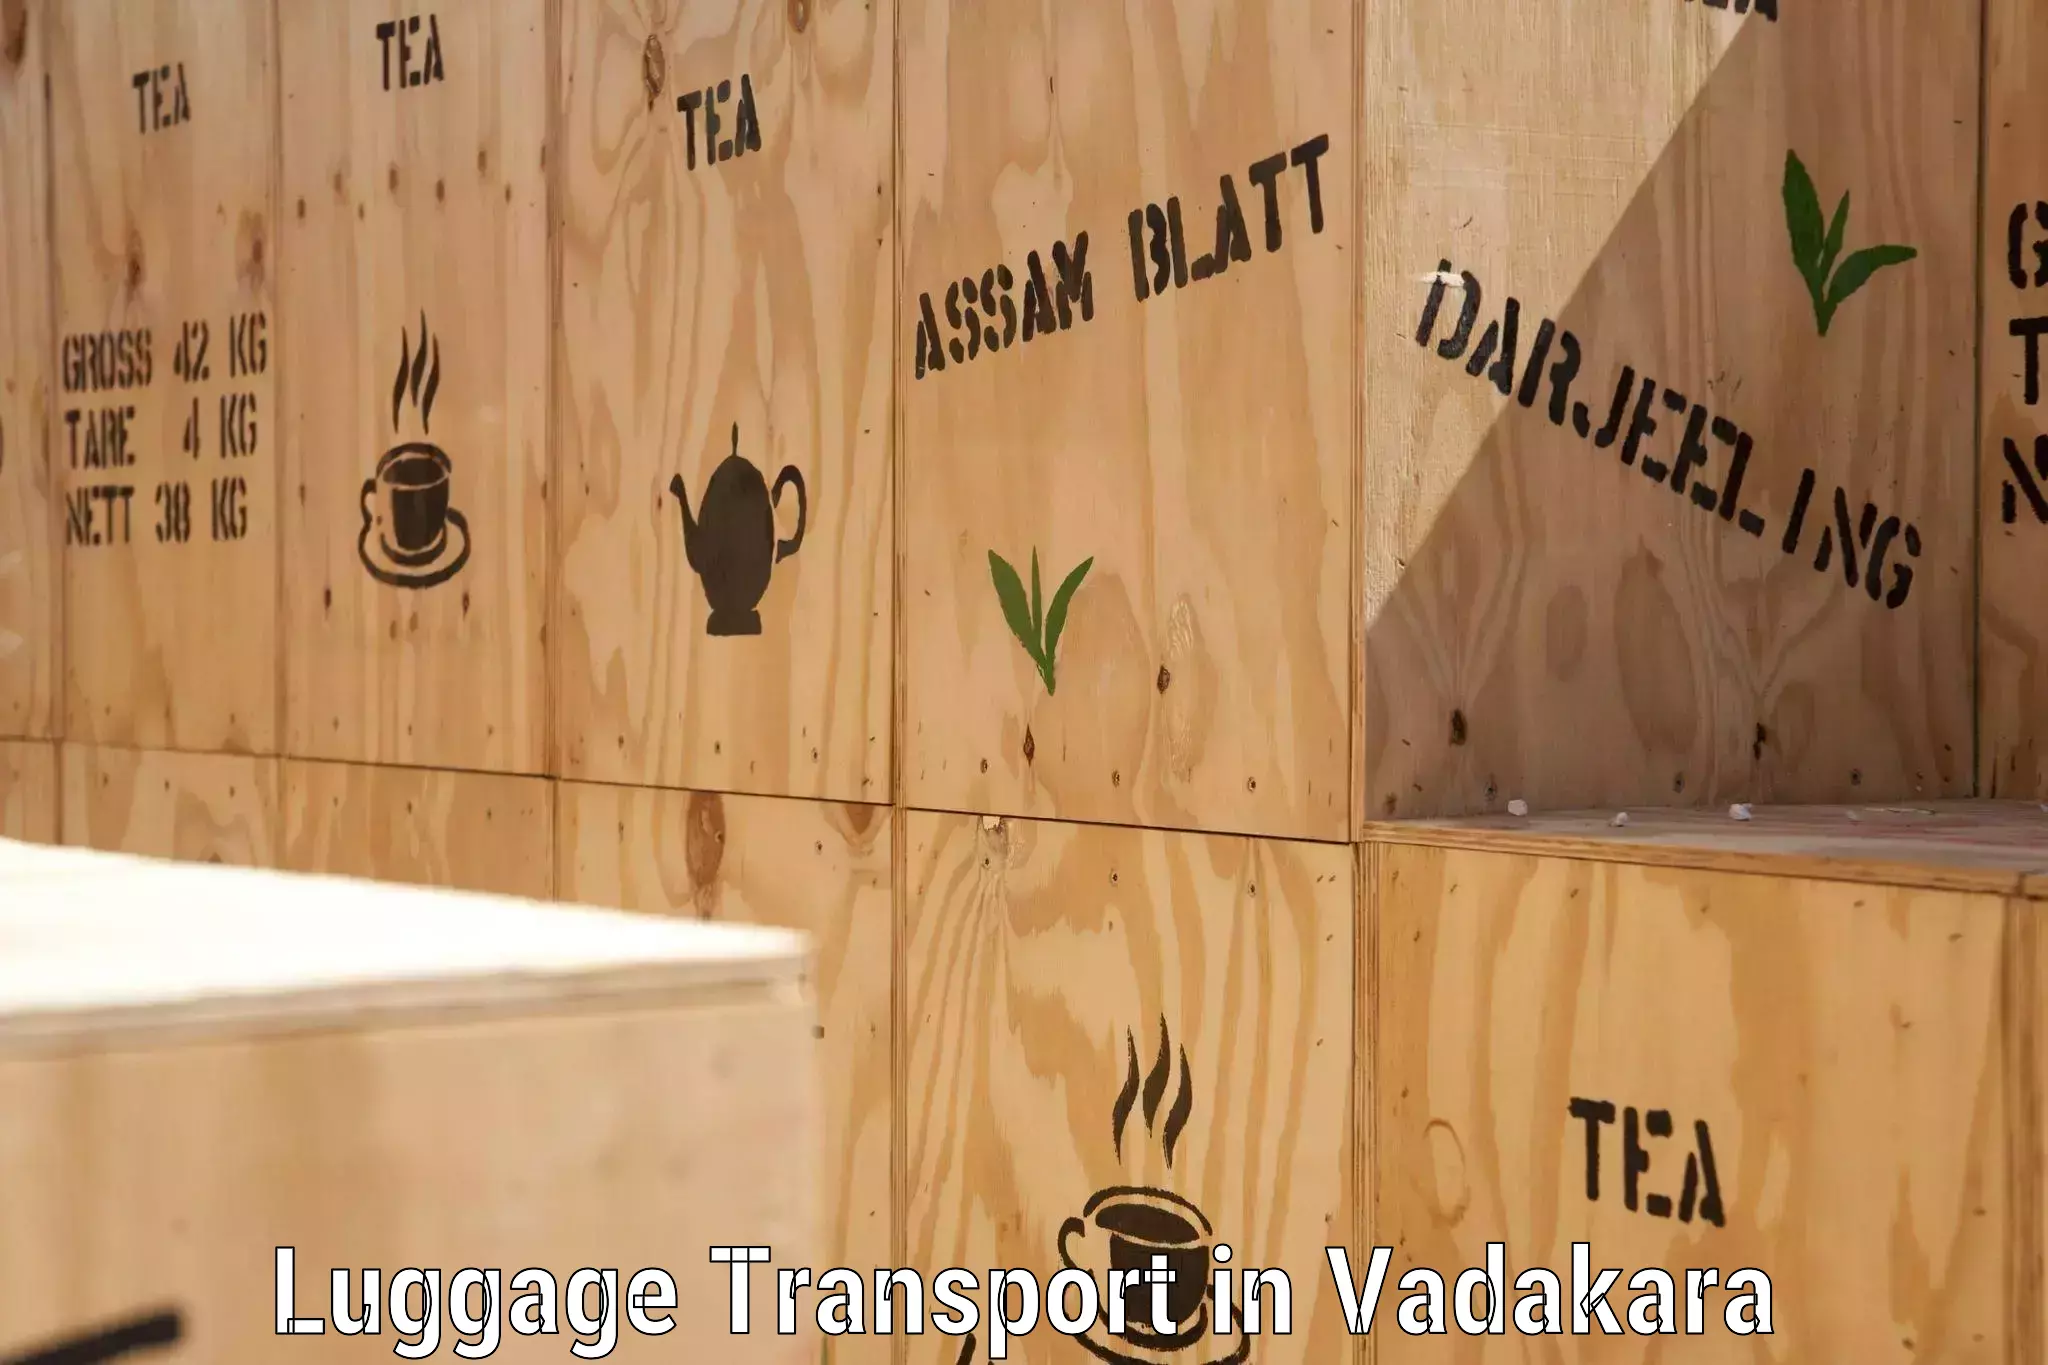 Luggage transport consulting in Vadakara